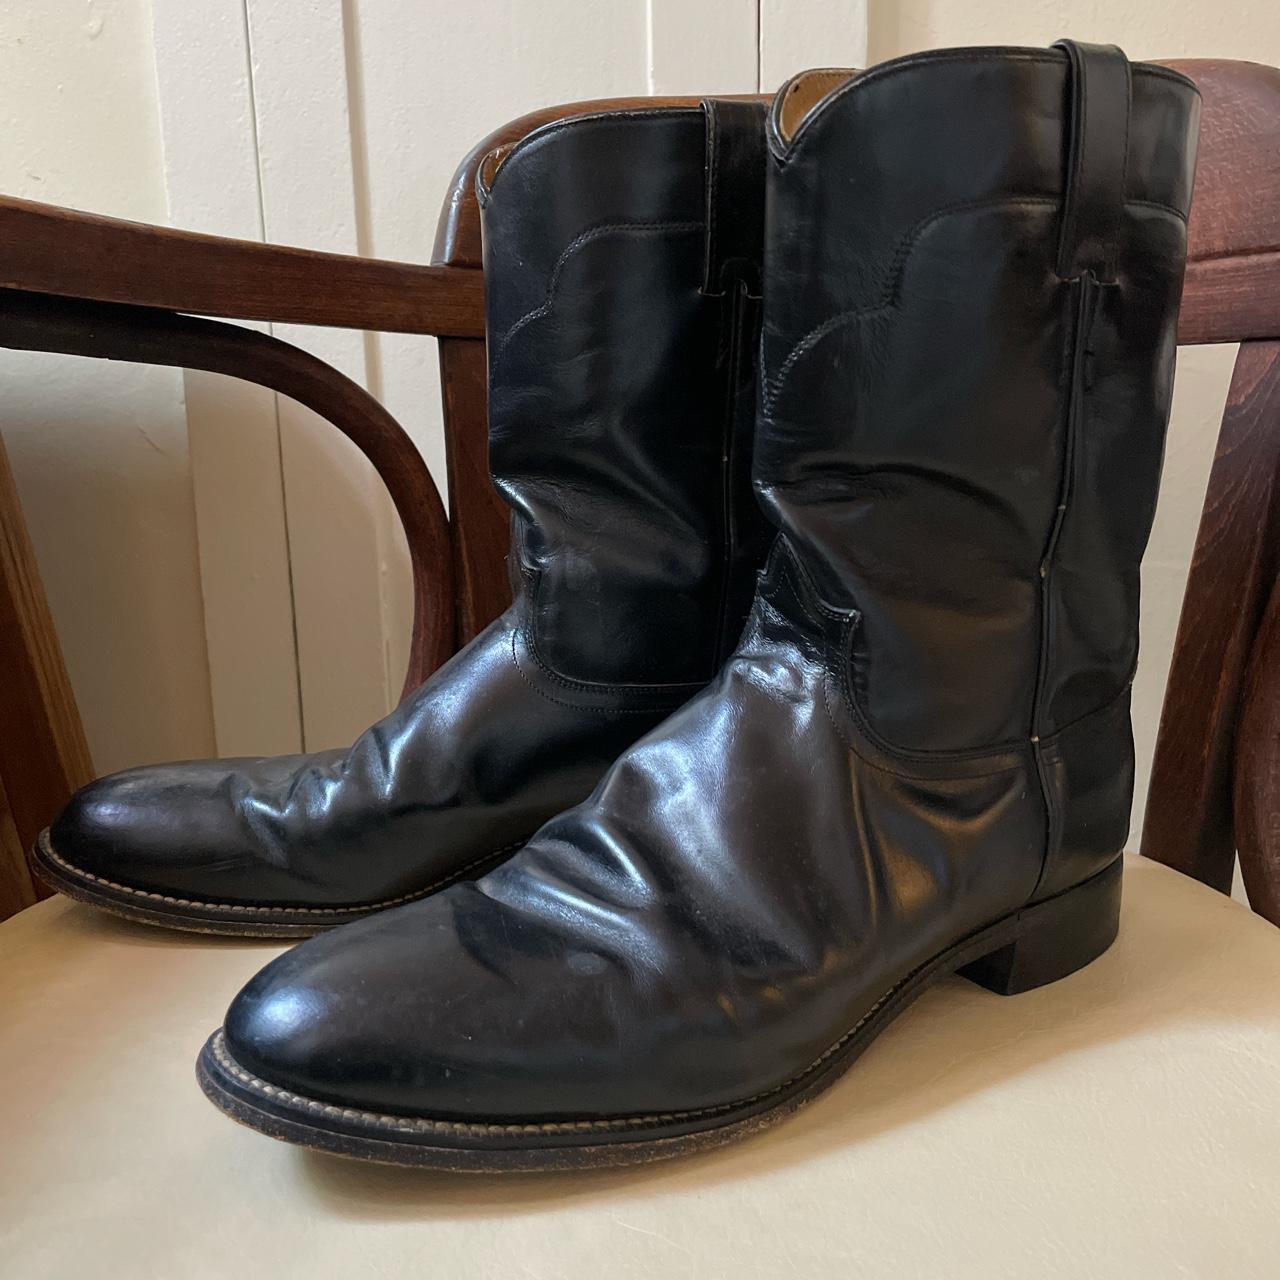 Tony Lama cowboy boots Ropers / Black leather... - Depop